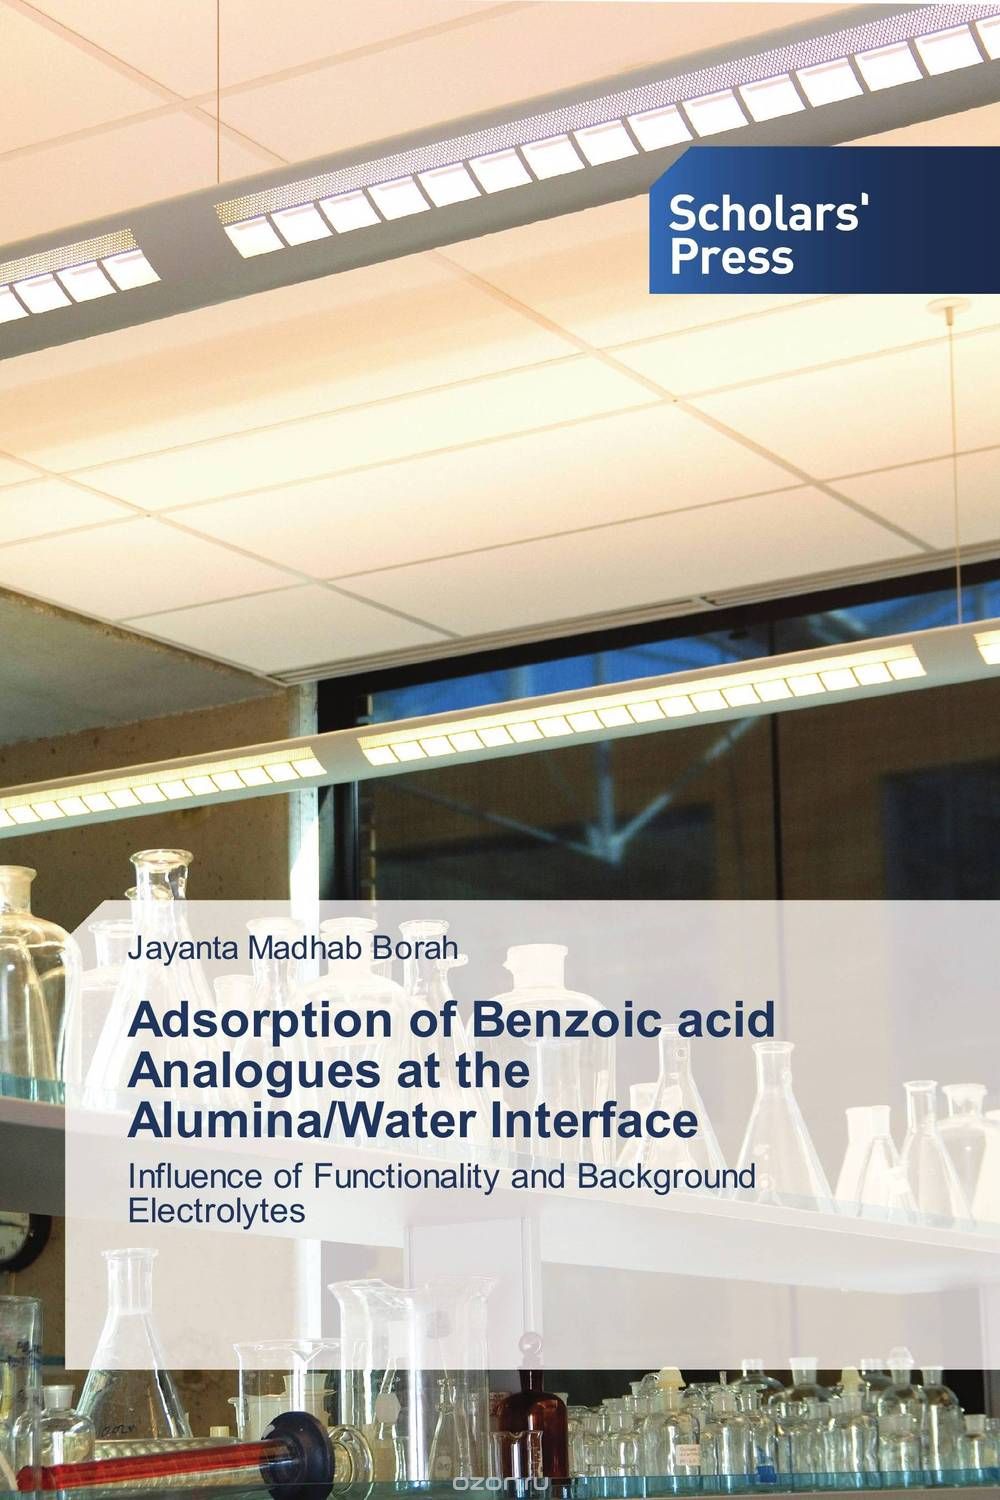 Скачать книгу "Adsorption of Benzoic acid Analogues at the Alumina/Water Interface"